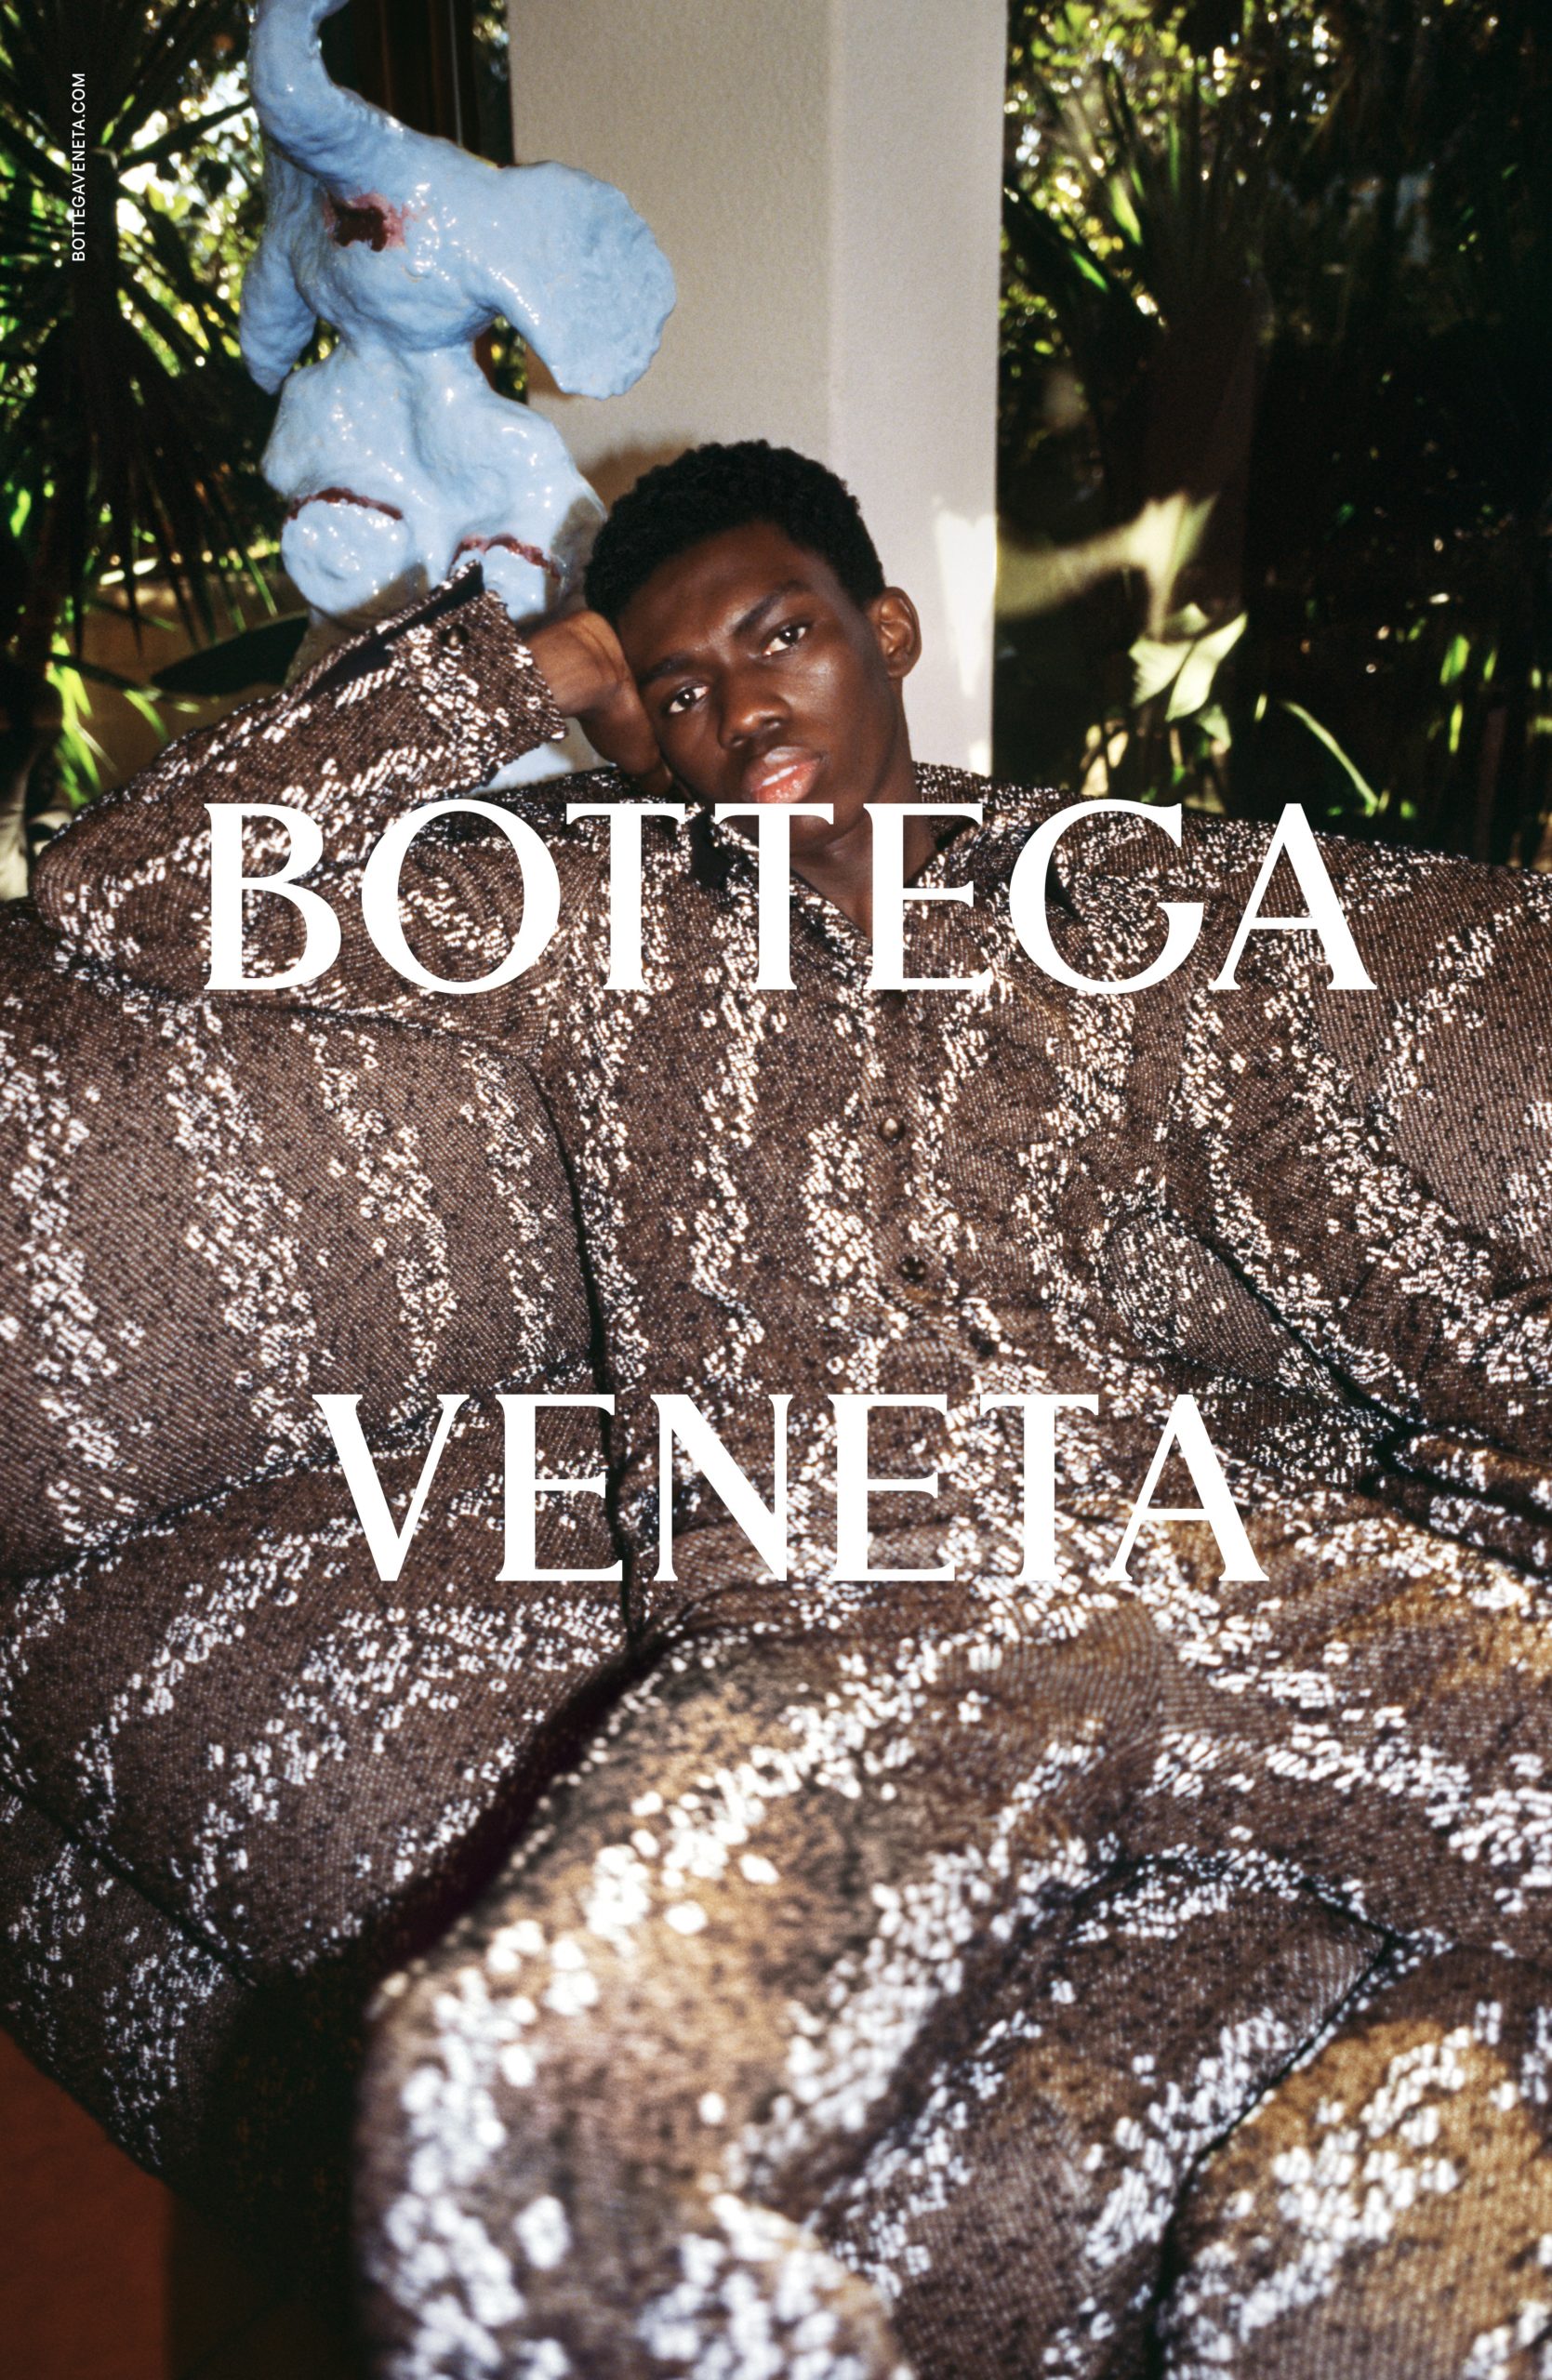 Bottega Veneta's New Campaign Is an Ode to Glamorous Domestic Living